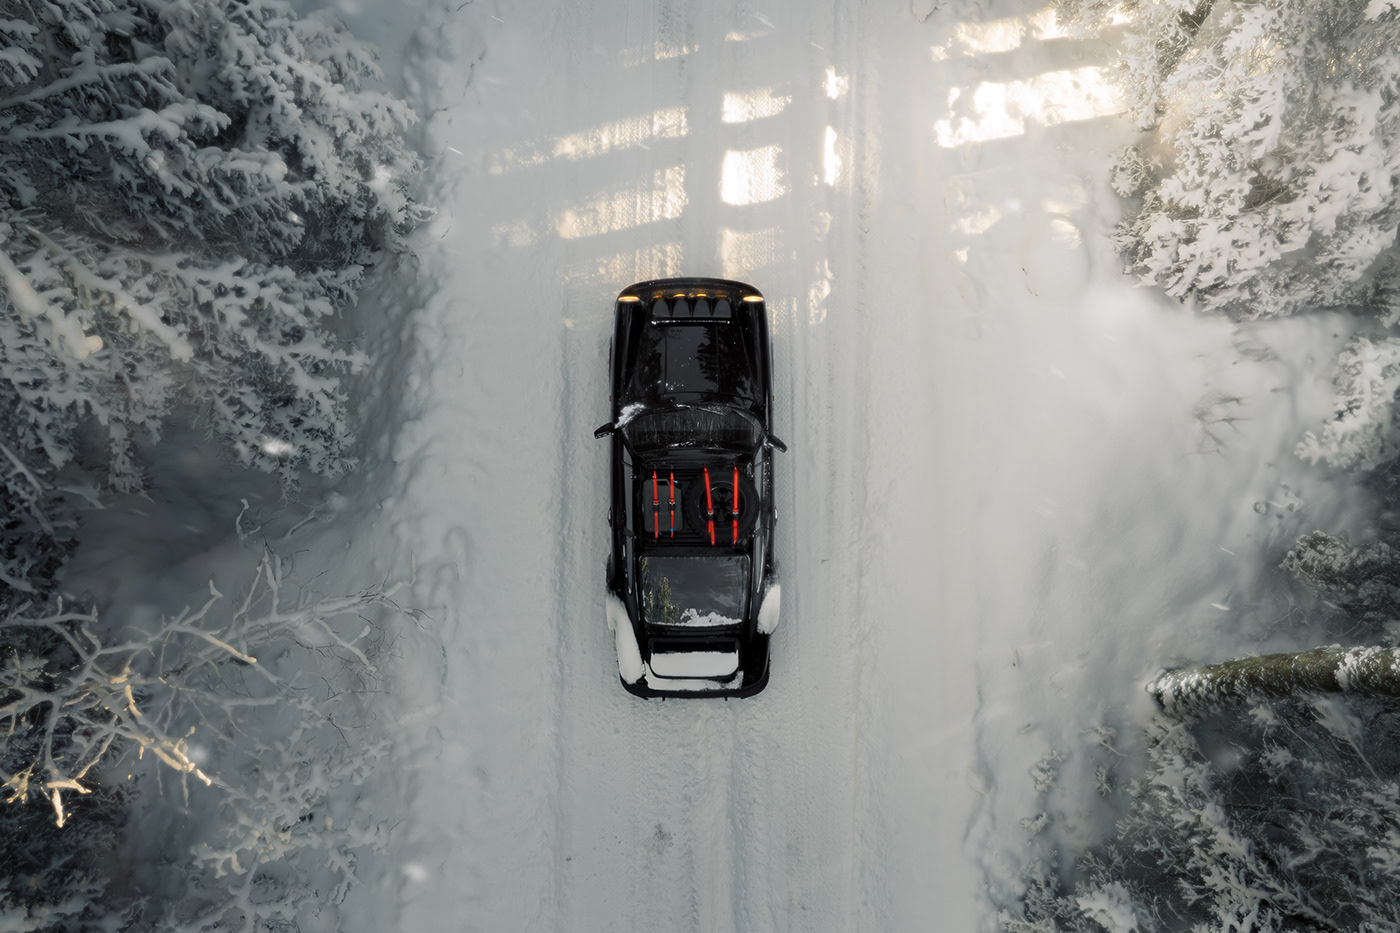 automotive   Photography  Porsche PORSCHE911 winter rally Offroad aircooled automotivephotography